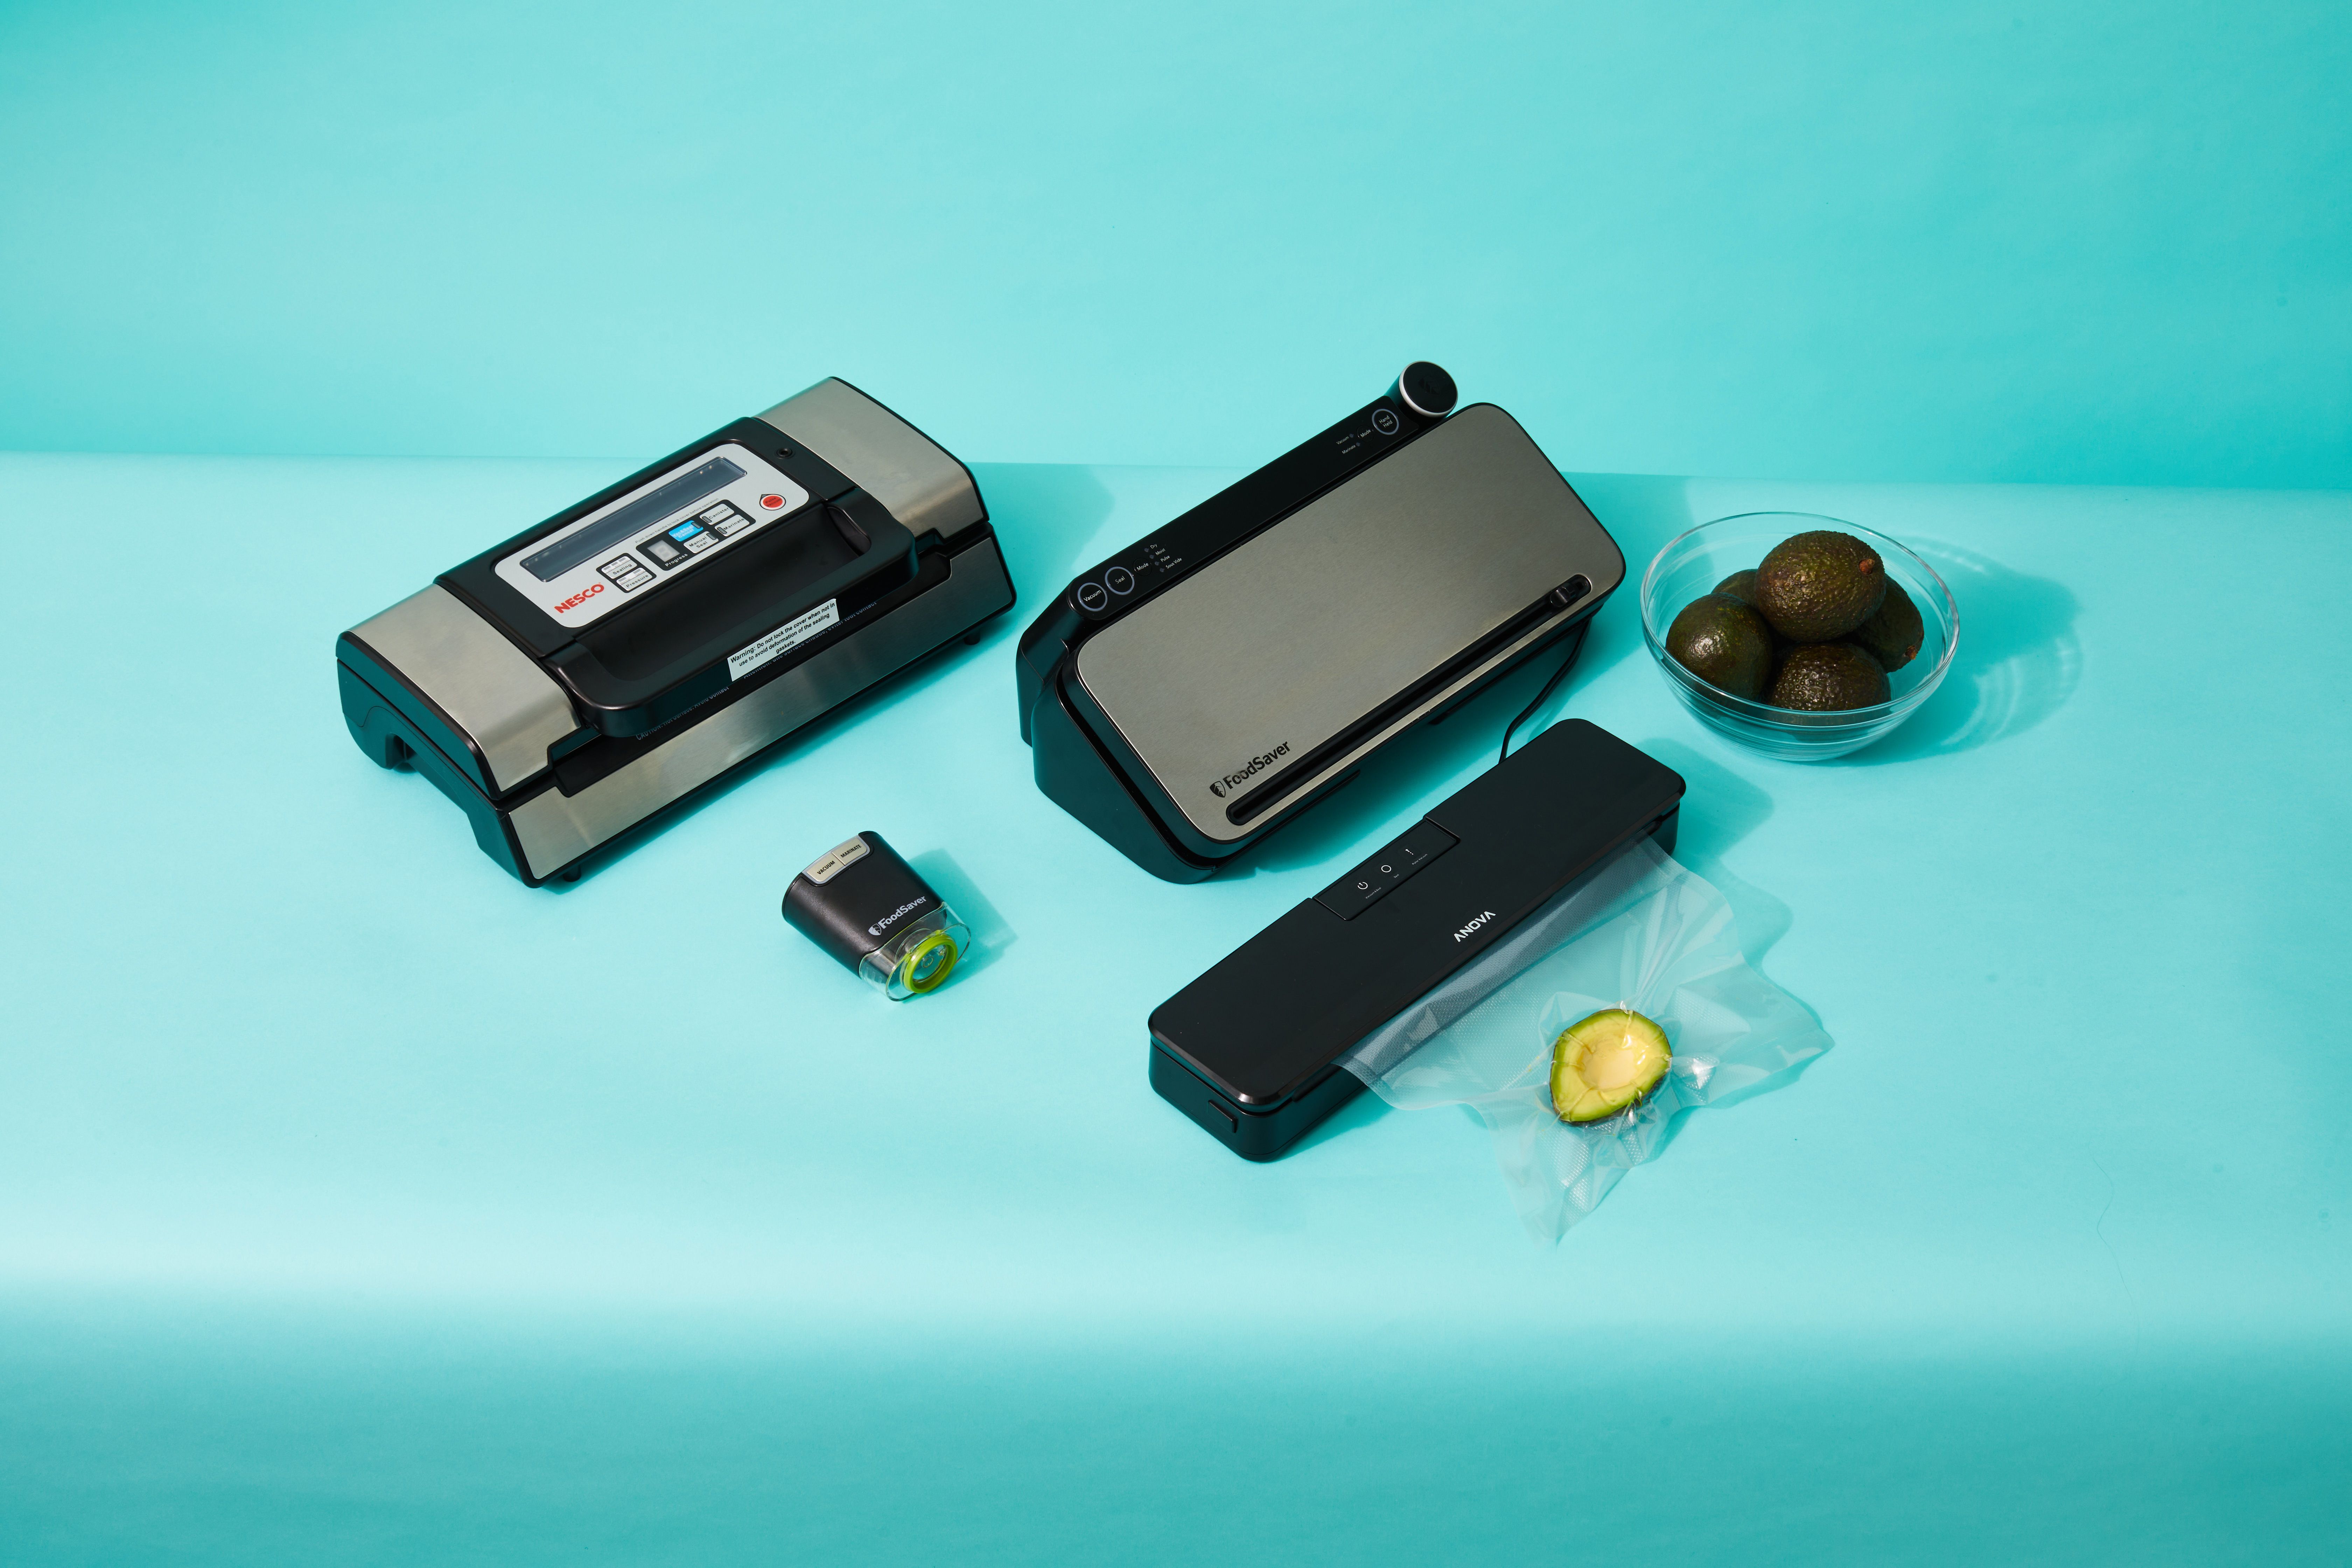 GH Tested: FoodSaver Cordless Handheld Vacuum Sealer